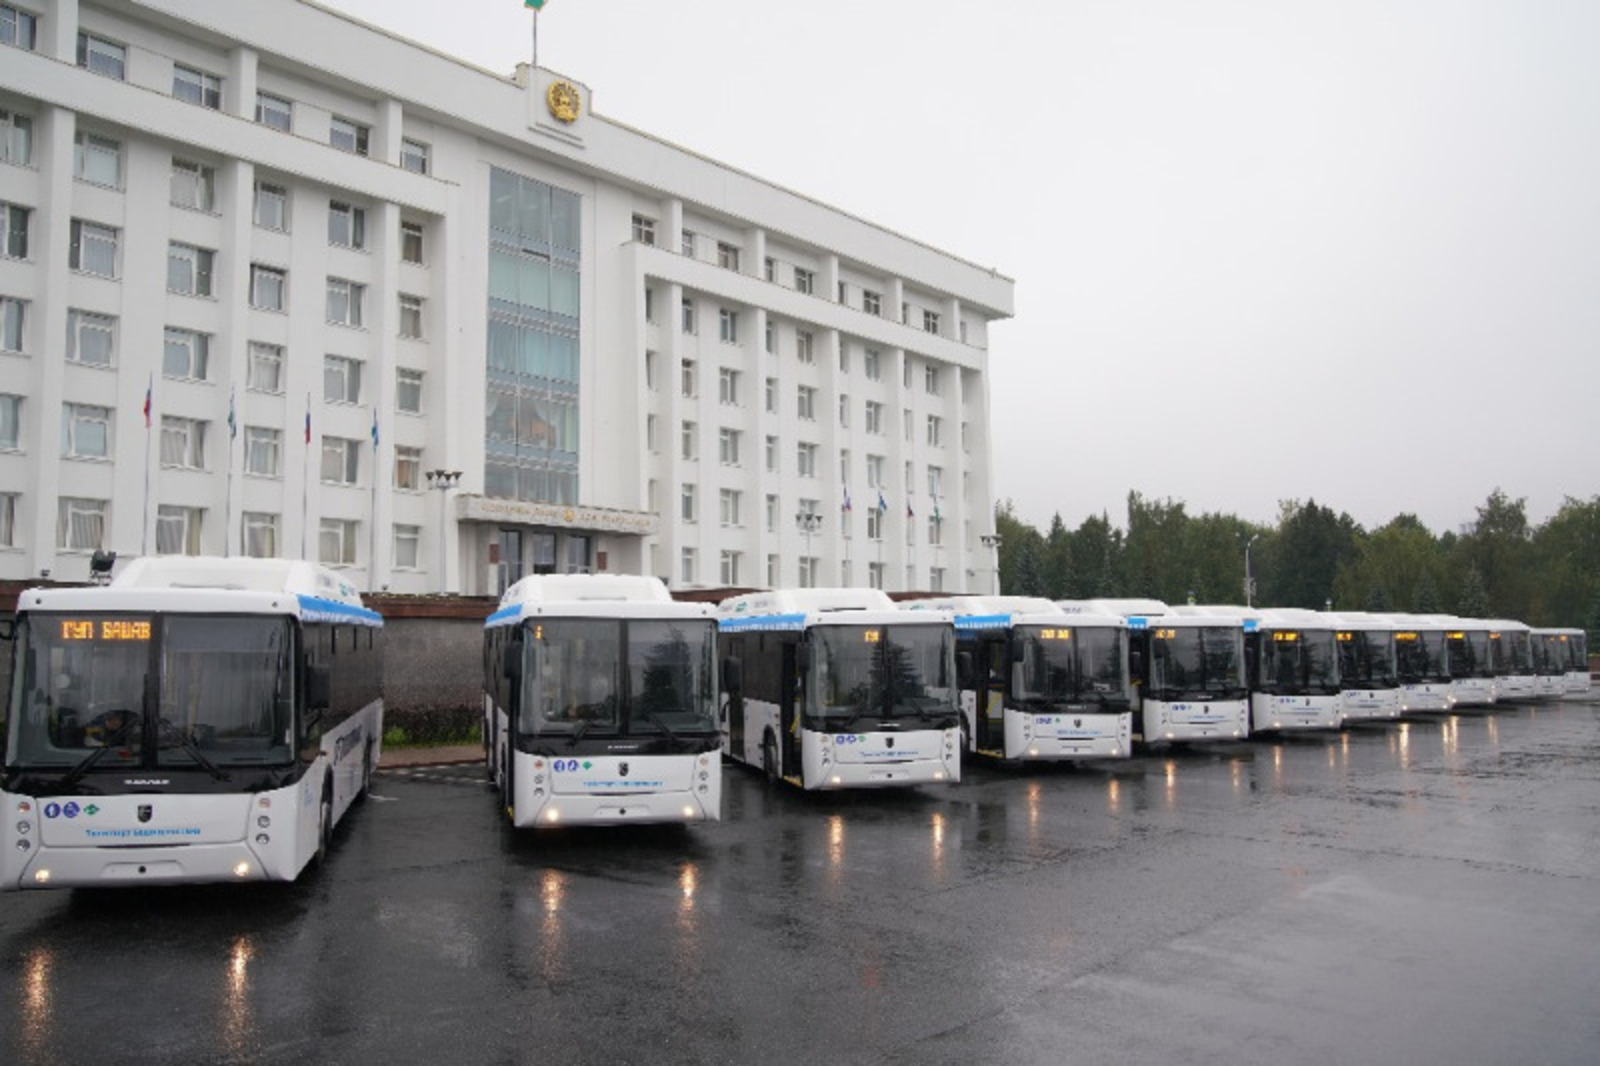 Пушкӑртстан "Хӑрушлӑхсӑр пахалӑхлӑ ҫулсем" наци проекта пула 85 автобус илӗ